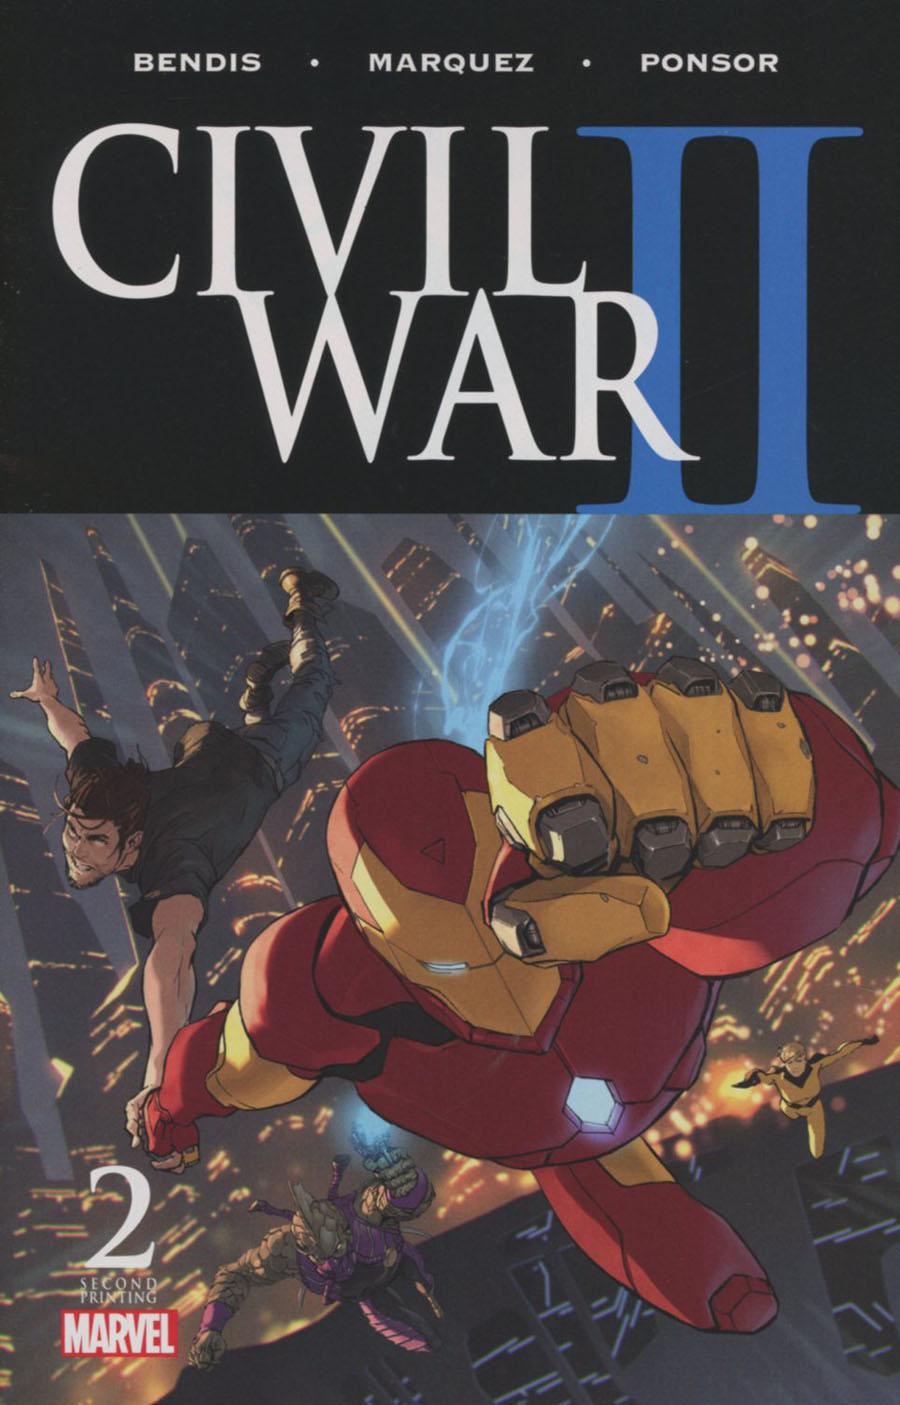 Civil War II Vol. 1 #2